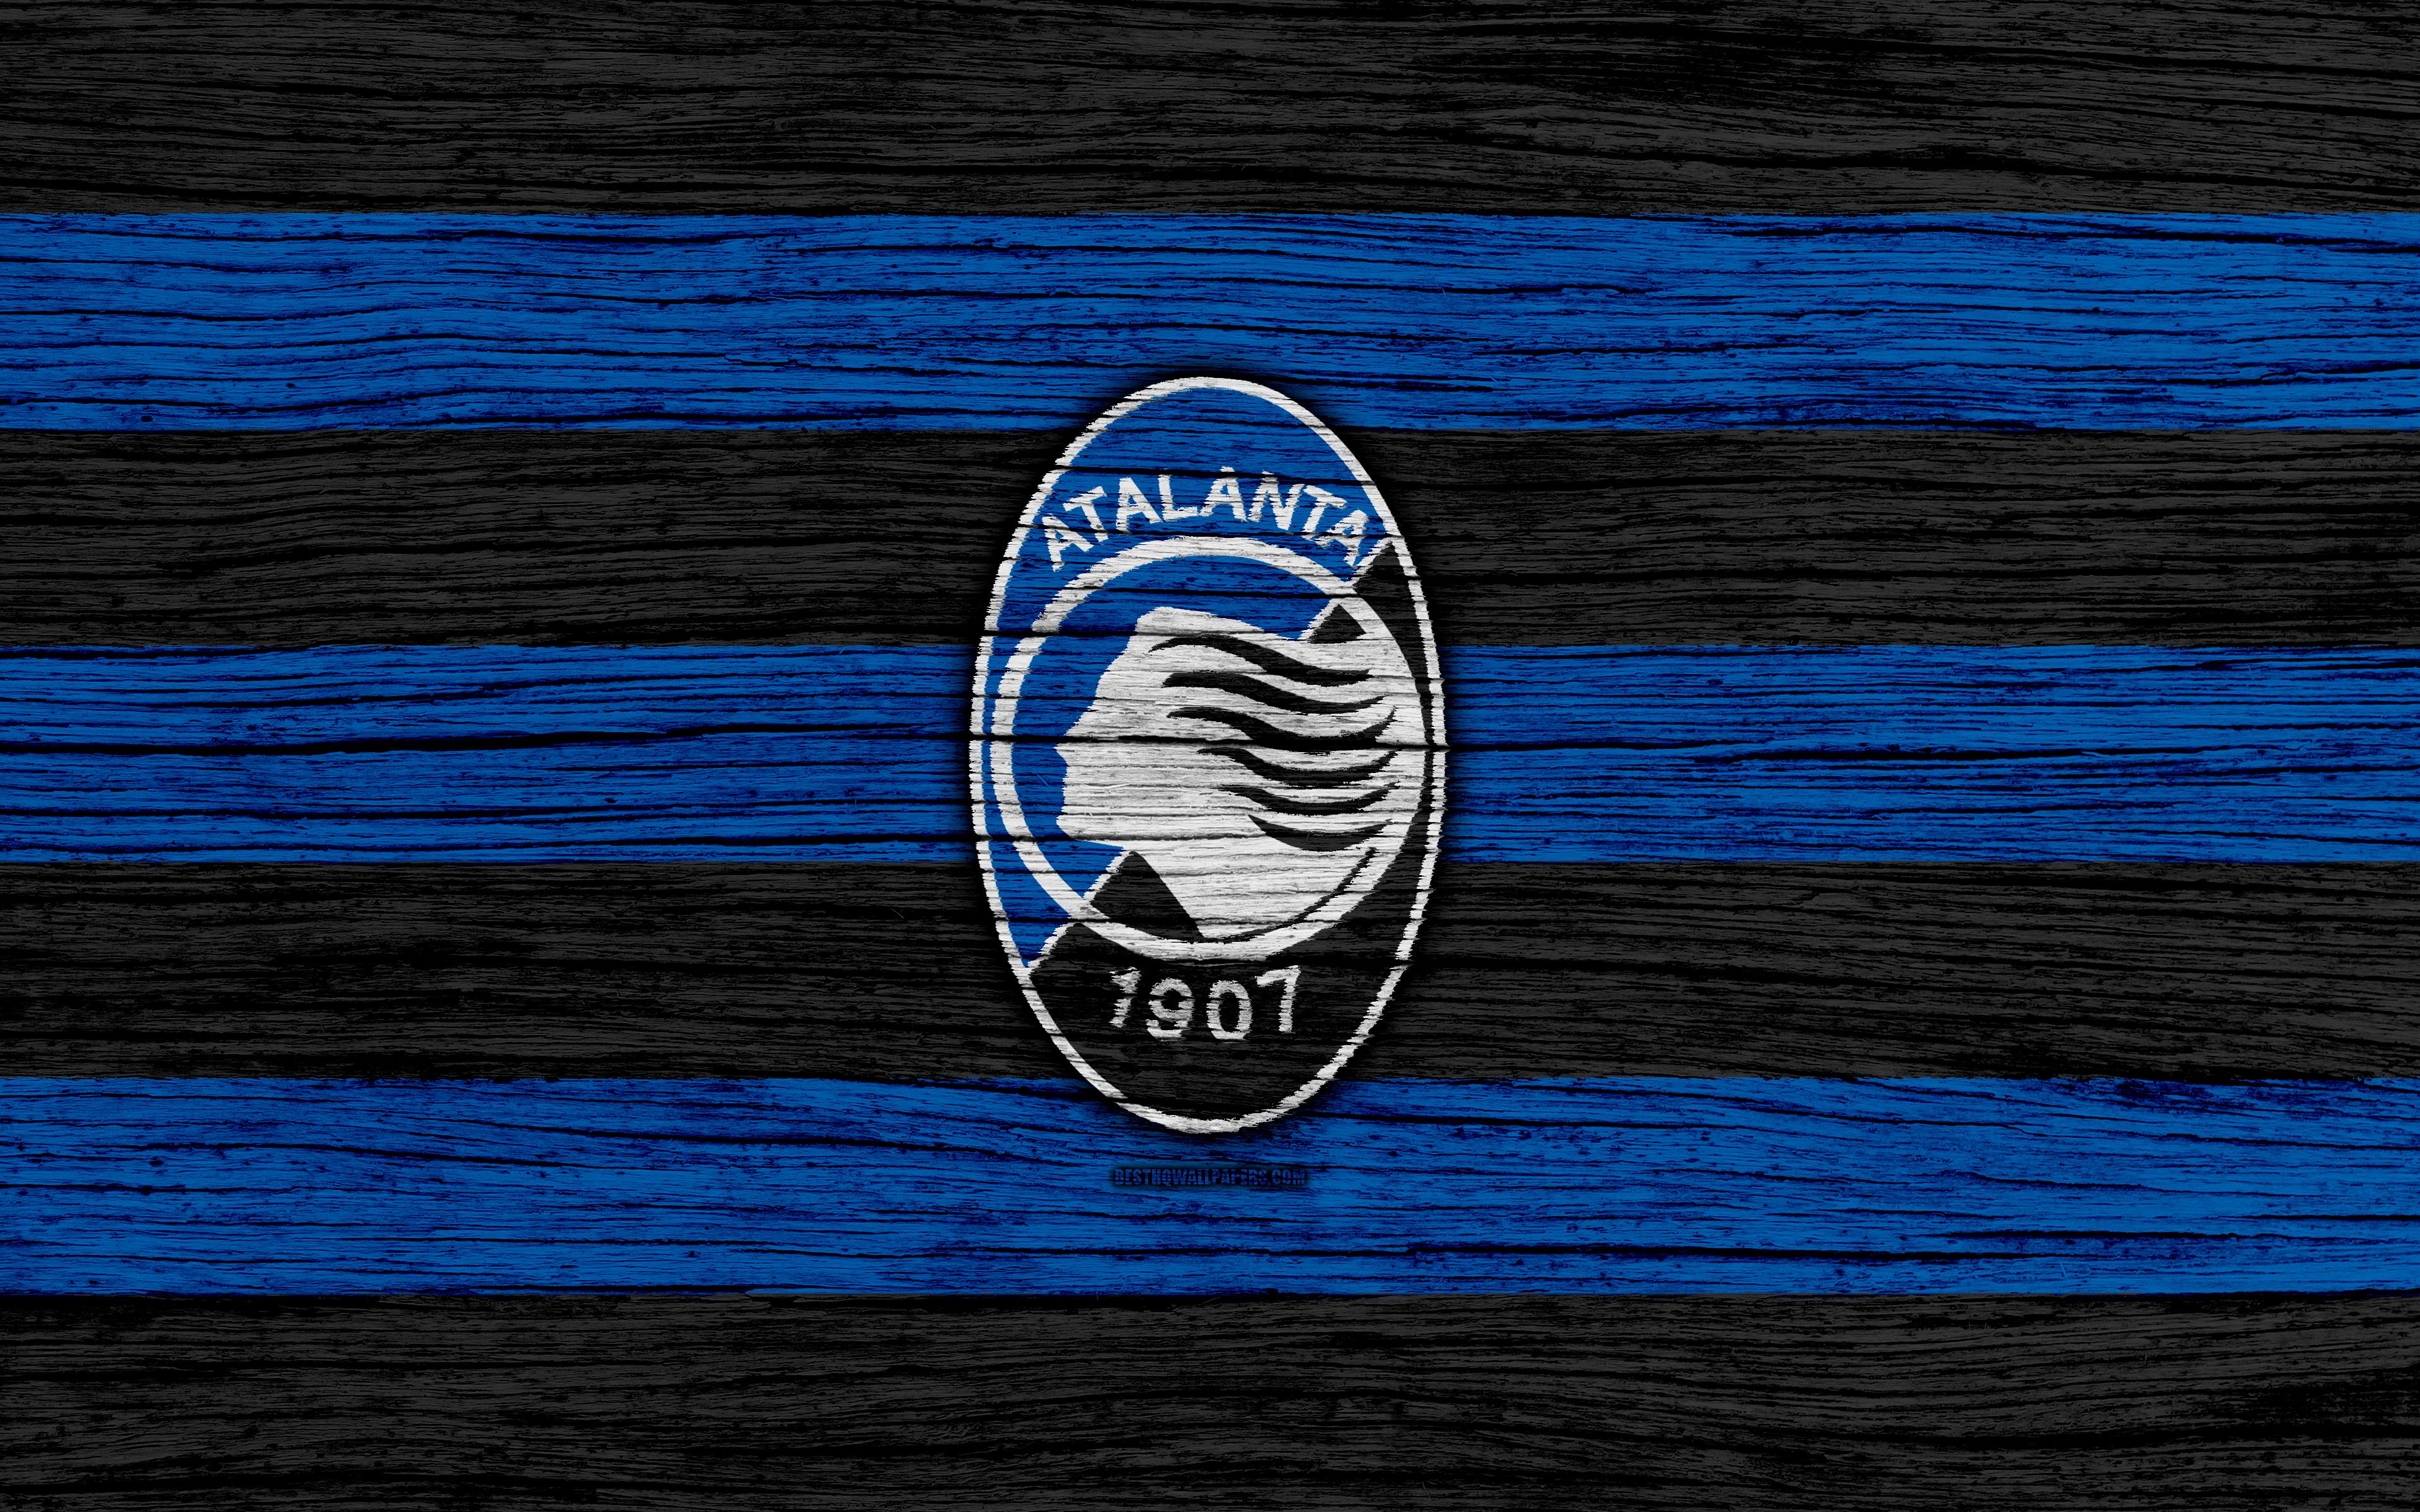 Download wallpaper Atalanta, 4k, Serie A, logo, Italy, wooden